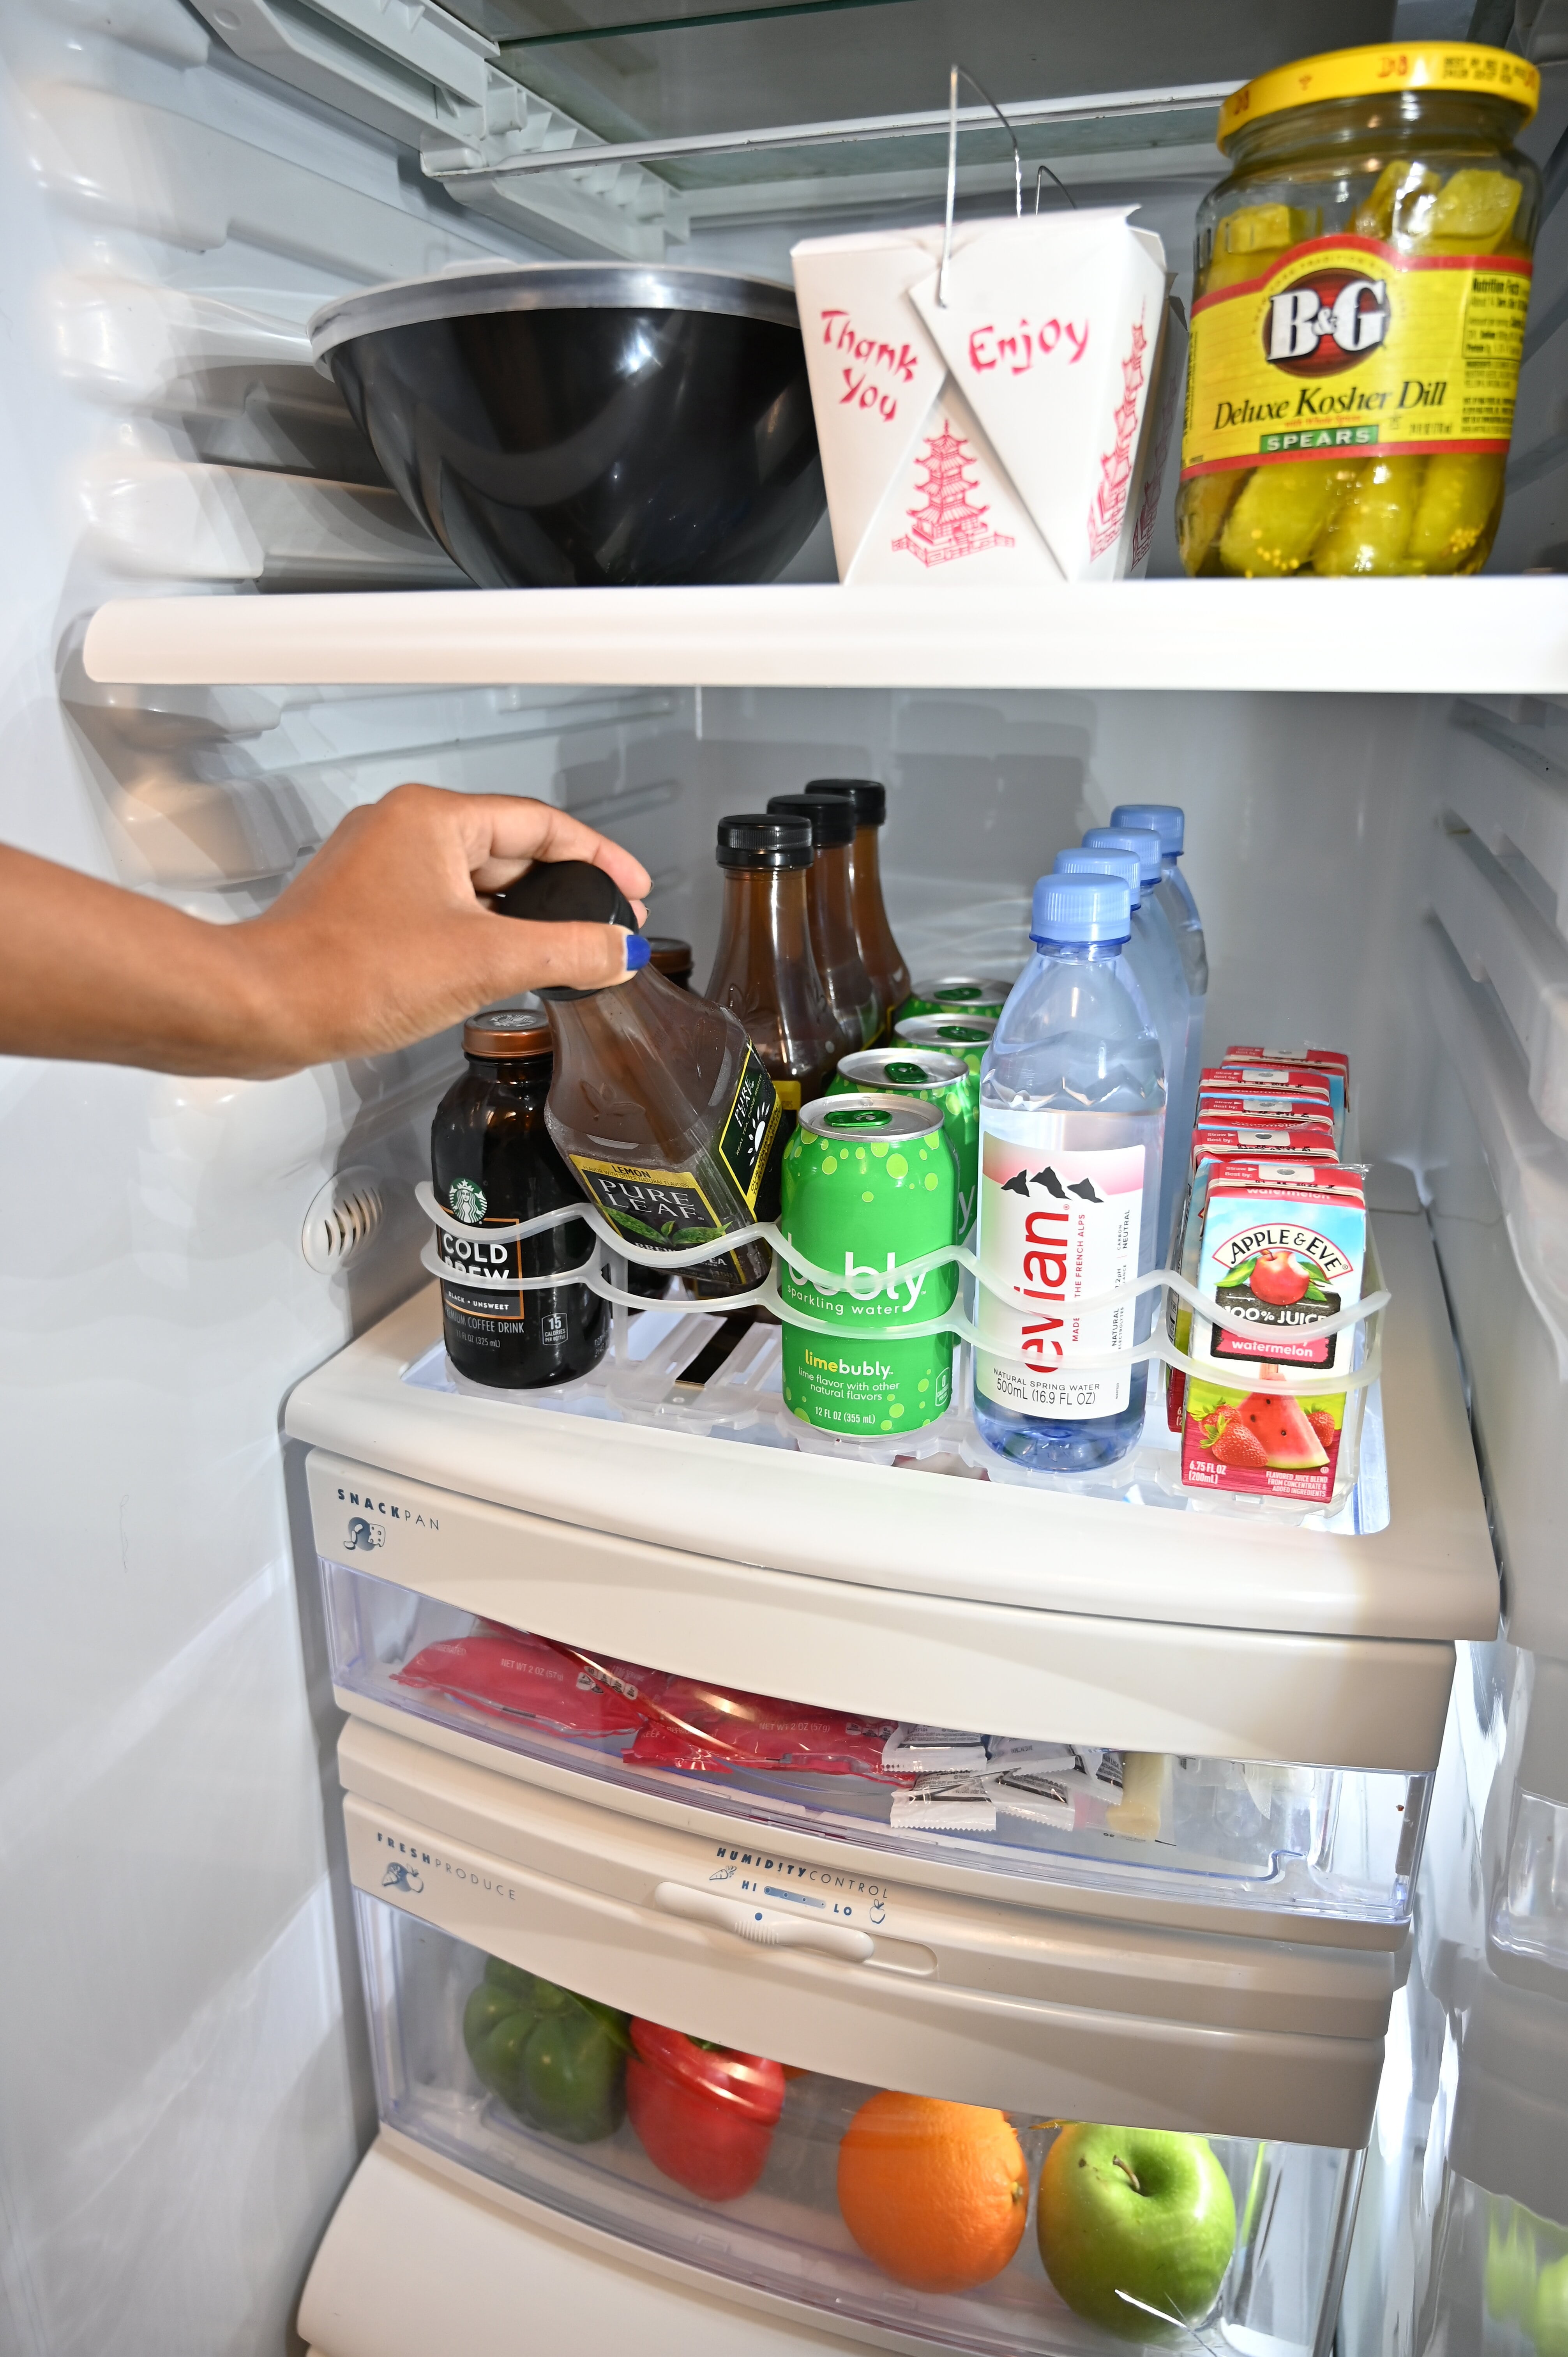 Display Technologies, Fridge-Plus Drink Organizer for Refrigerator Storage - Beverage Bottle Can Dispenser and Soda Rack for Bar Fridge (Pack of 1)